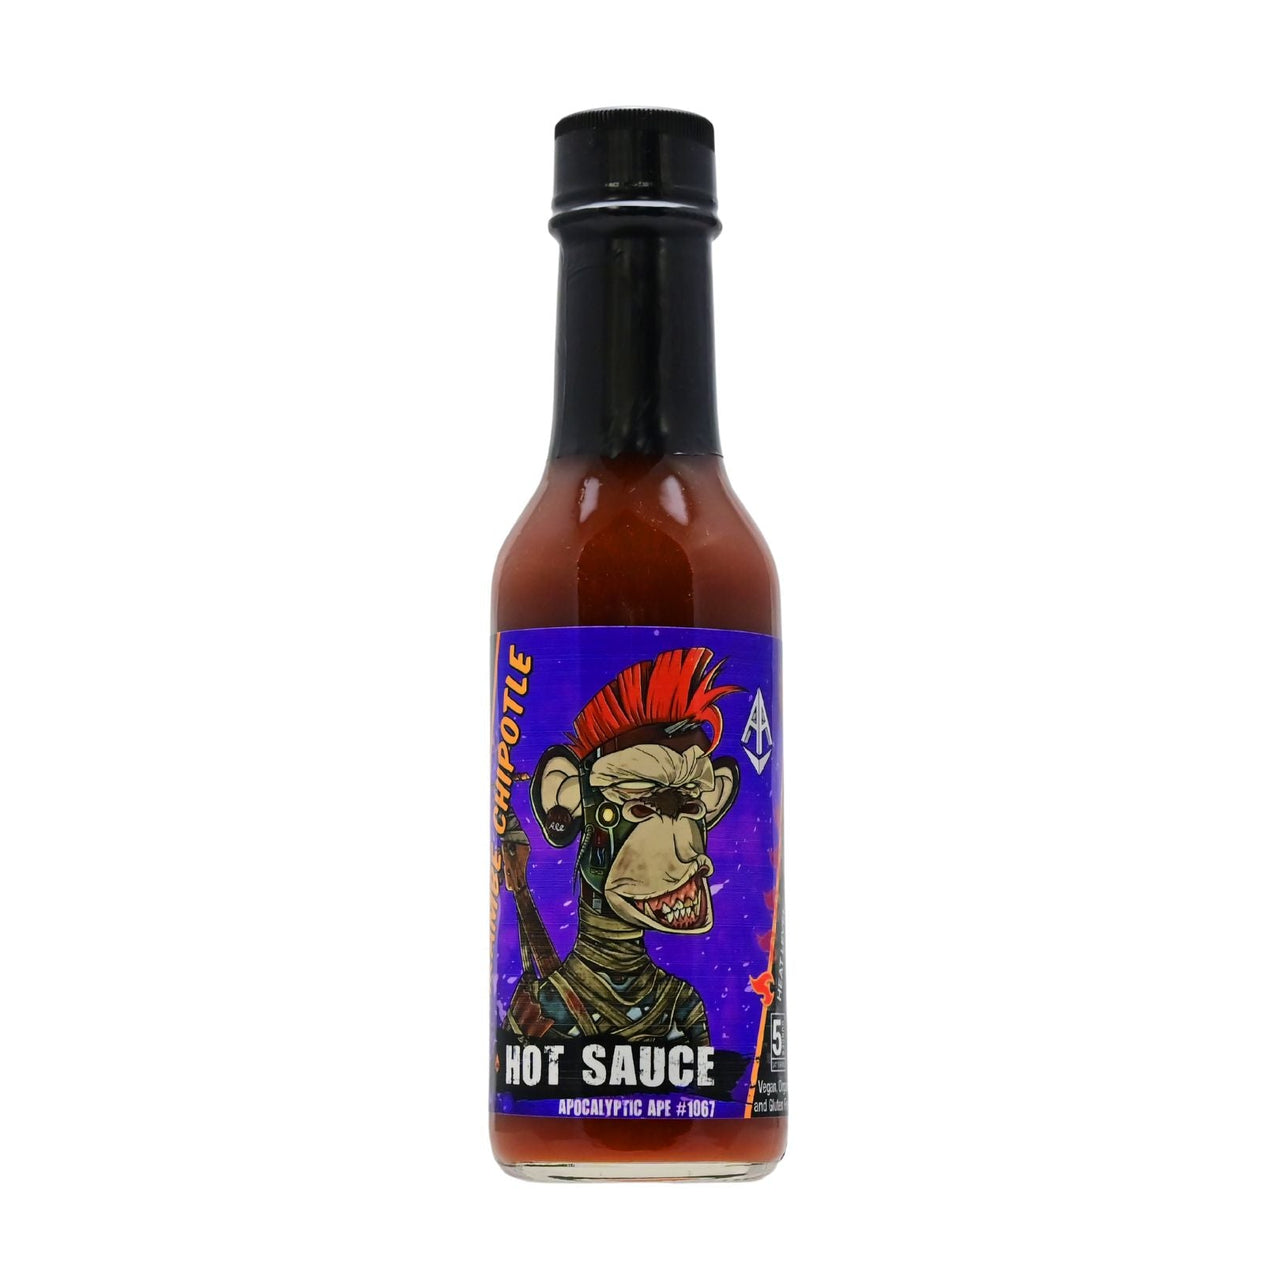 Apocalyptic Ape #1067 Harambe Chipotle Hot Sauce